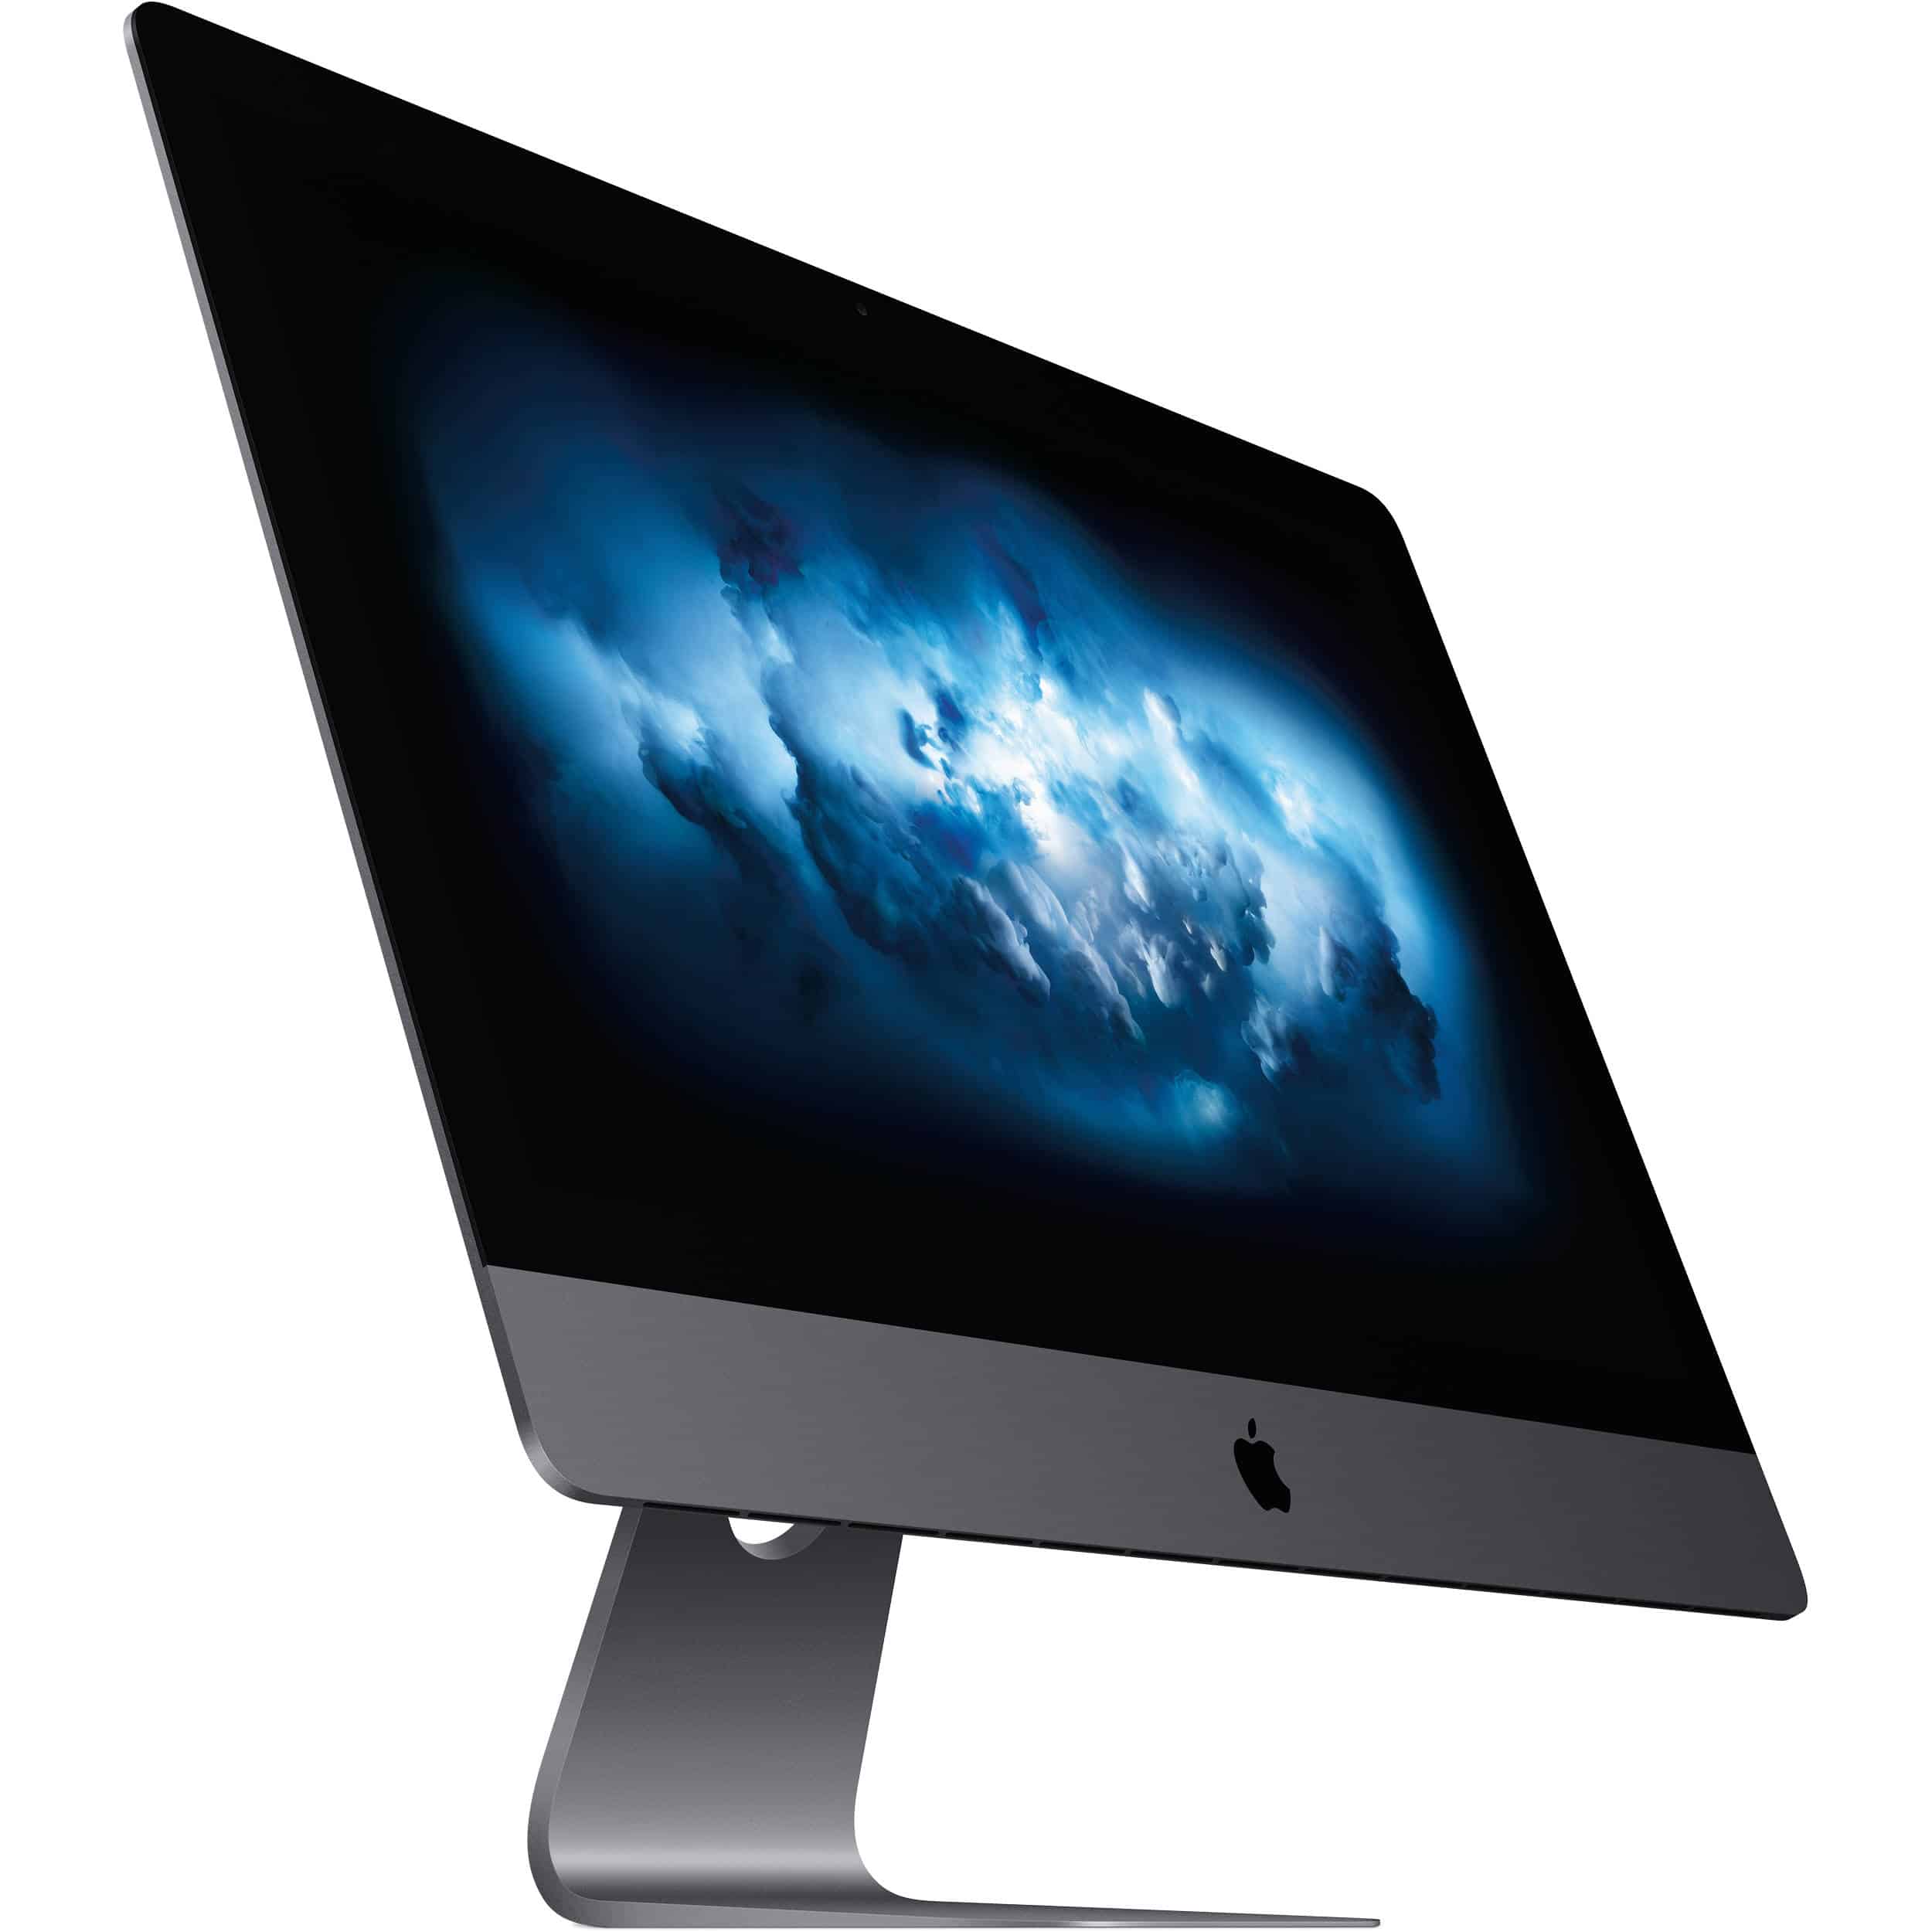 The 27-inch iMac Pro.